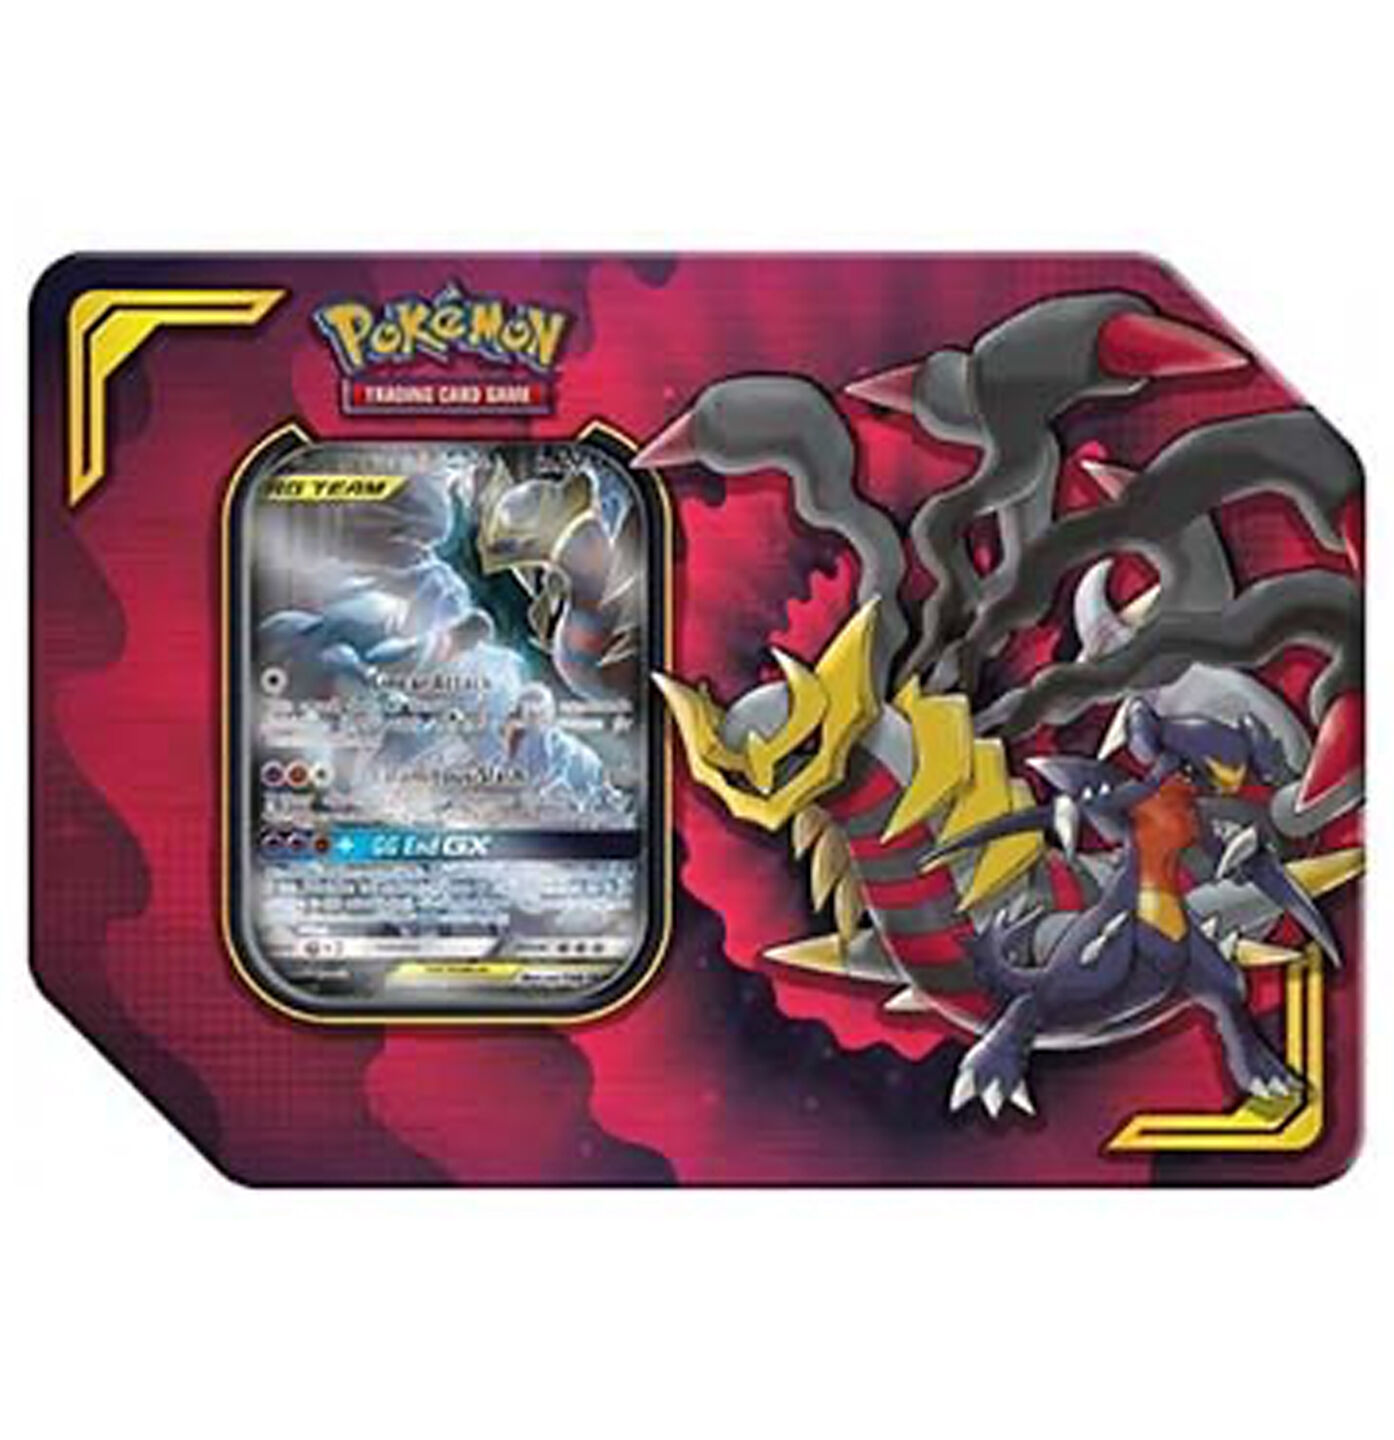 Pokémon TAG TEAM Garchomp & Giratina GX Tin Box - EN